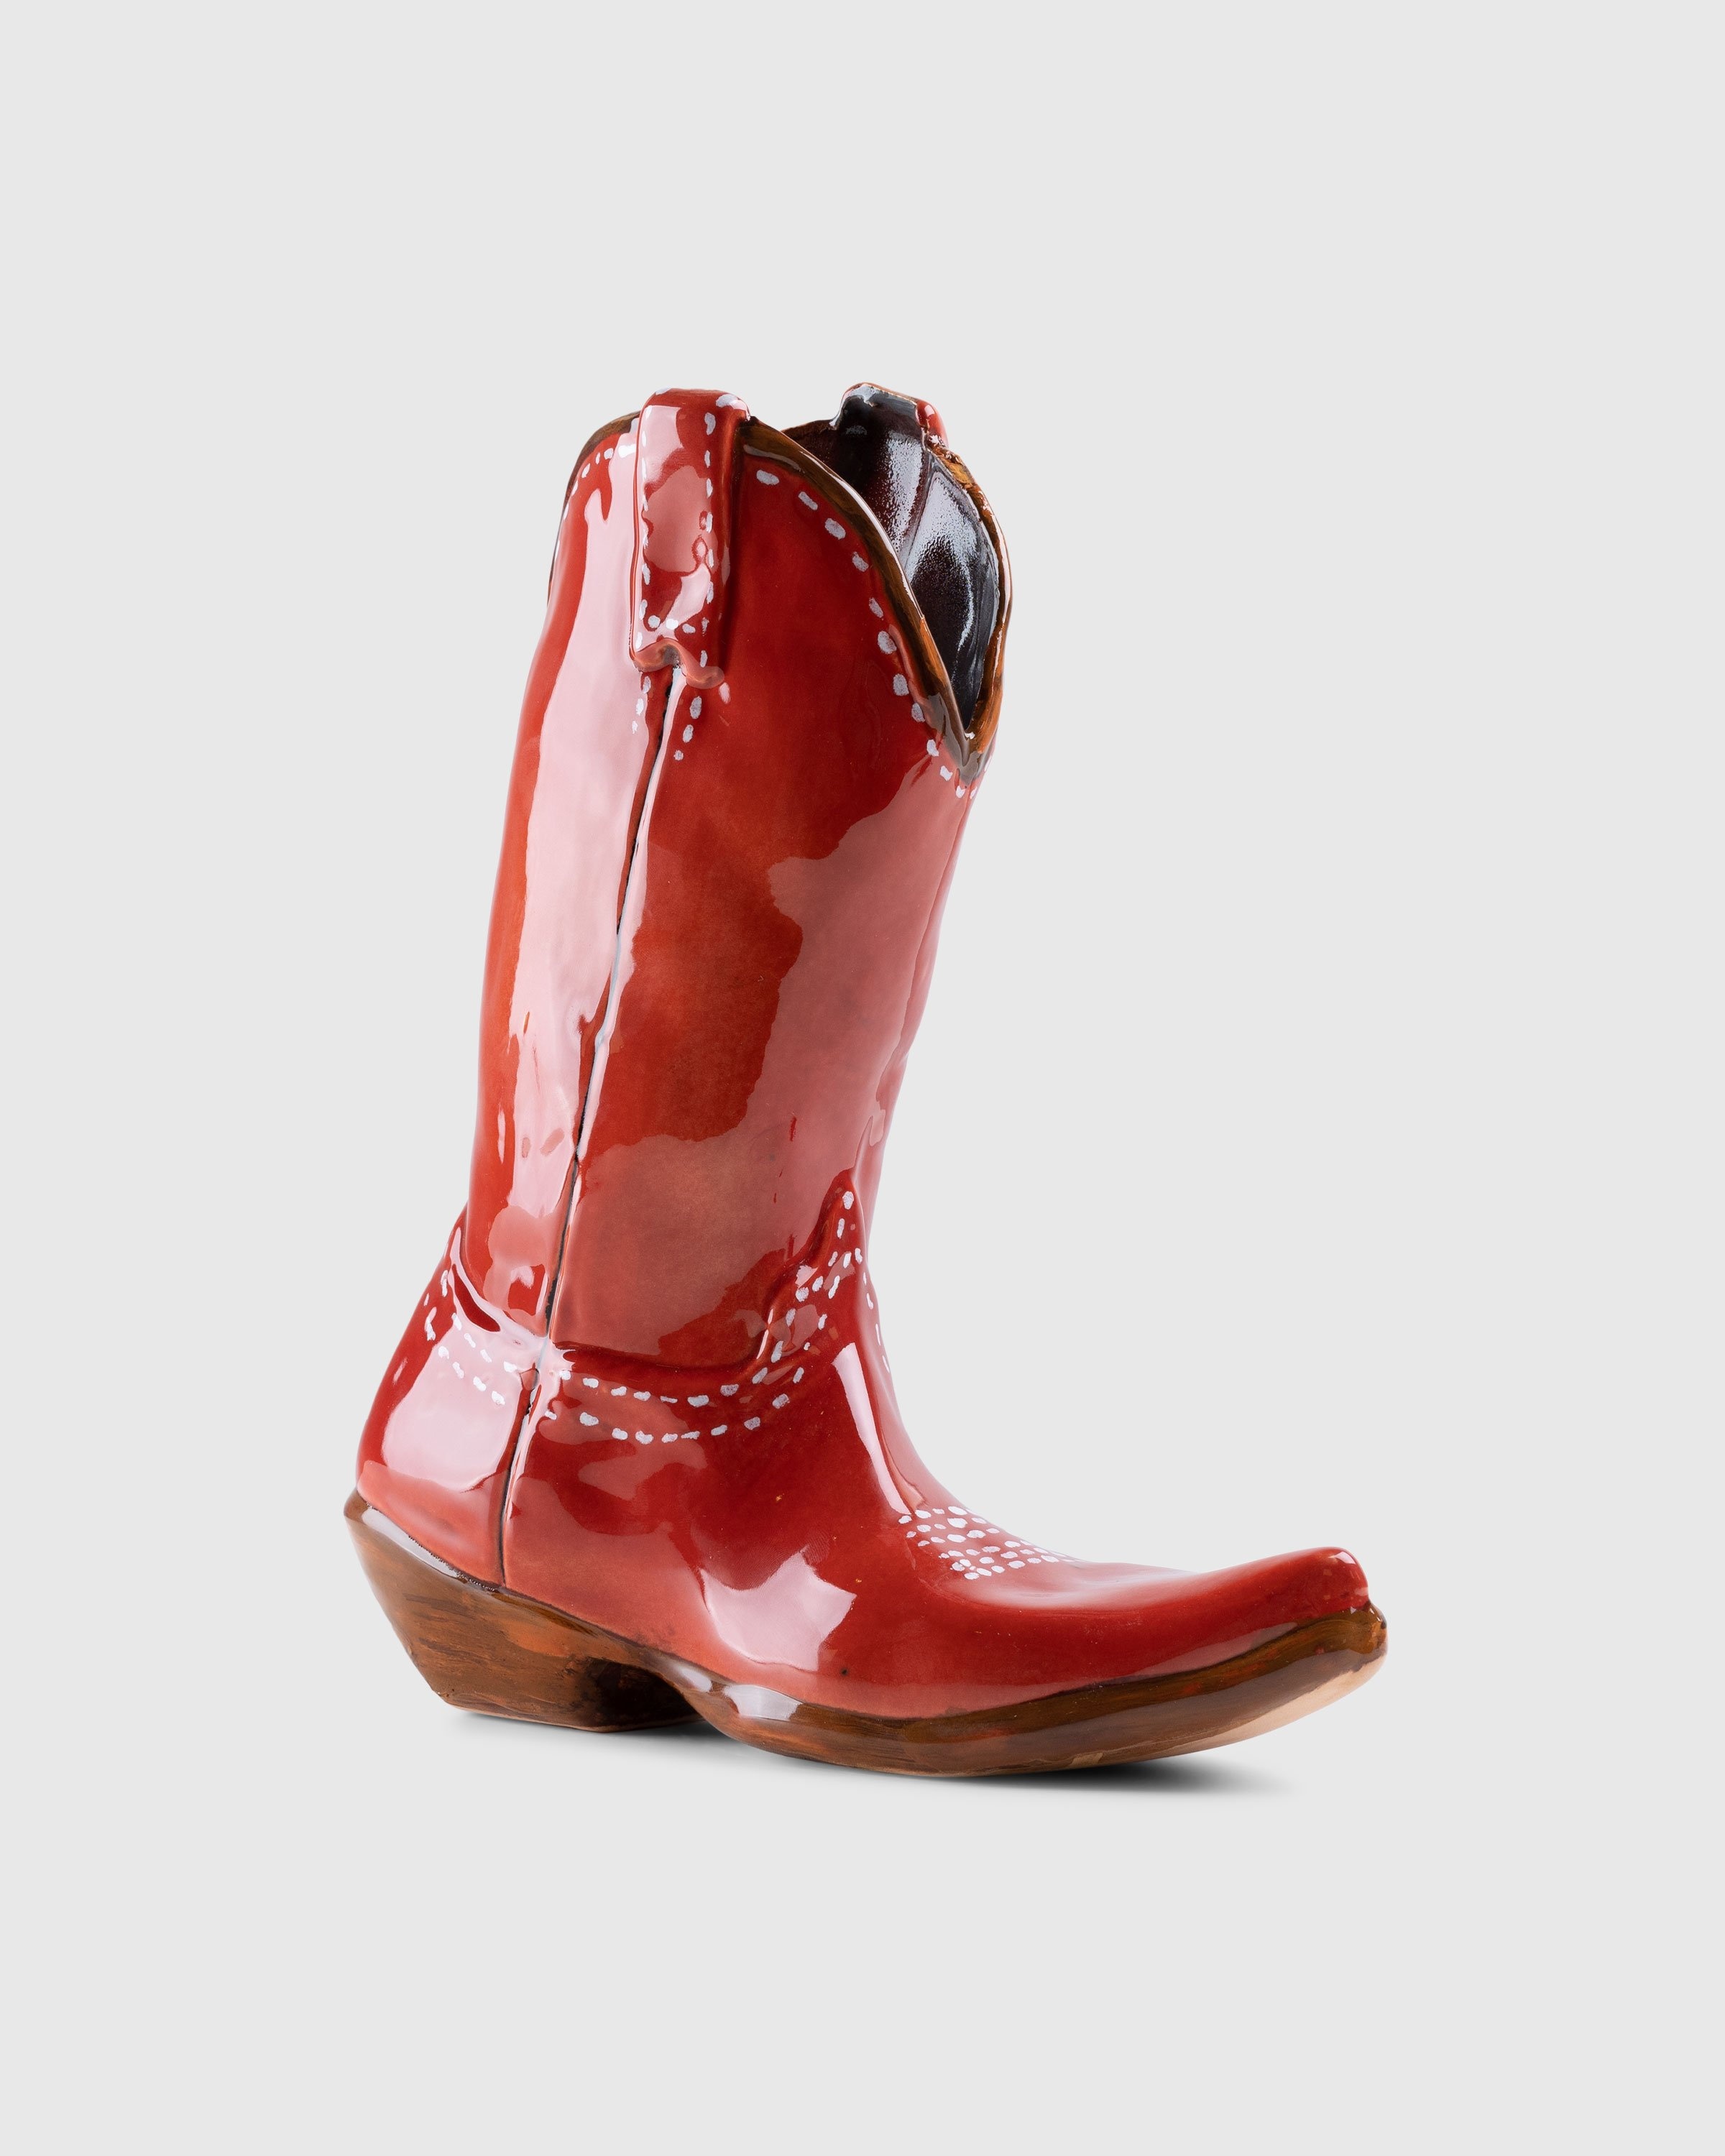 Zordan Generazione – Texan Vase Red - Deco - Red - Image 2